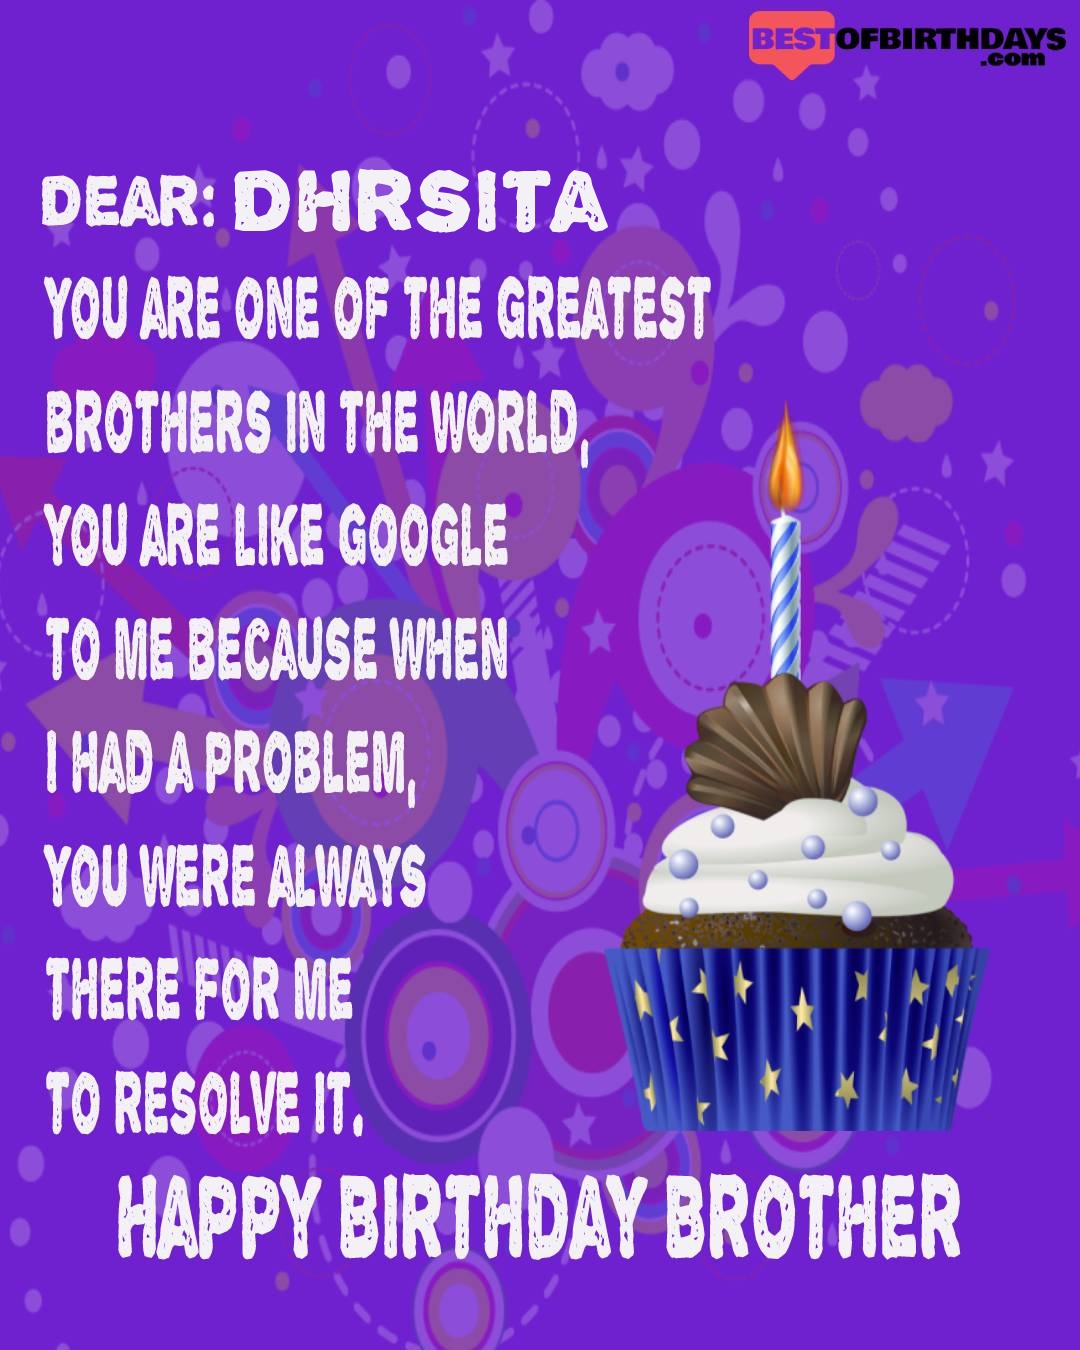 Happy birthday dhrsita bhai brother bro